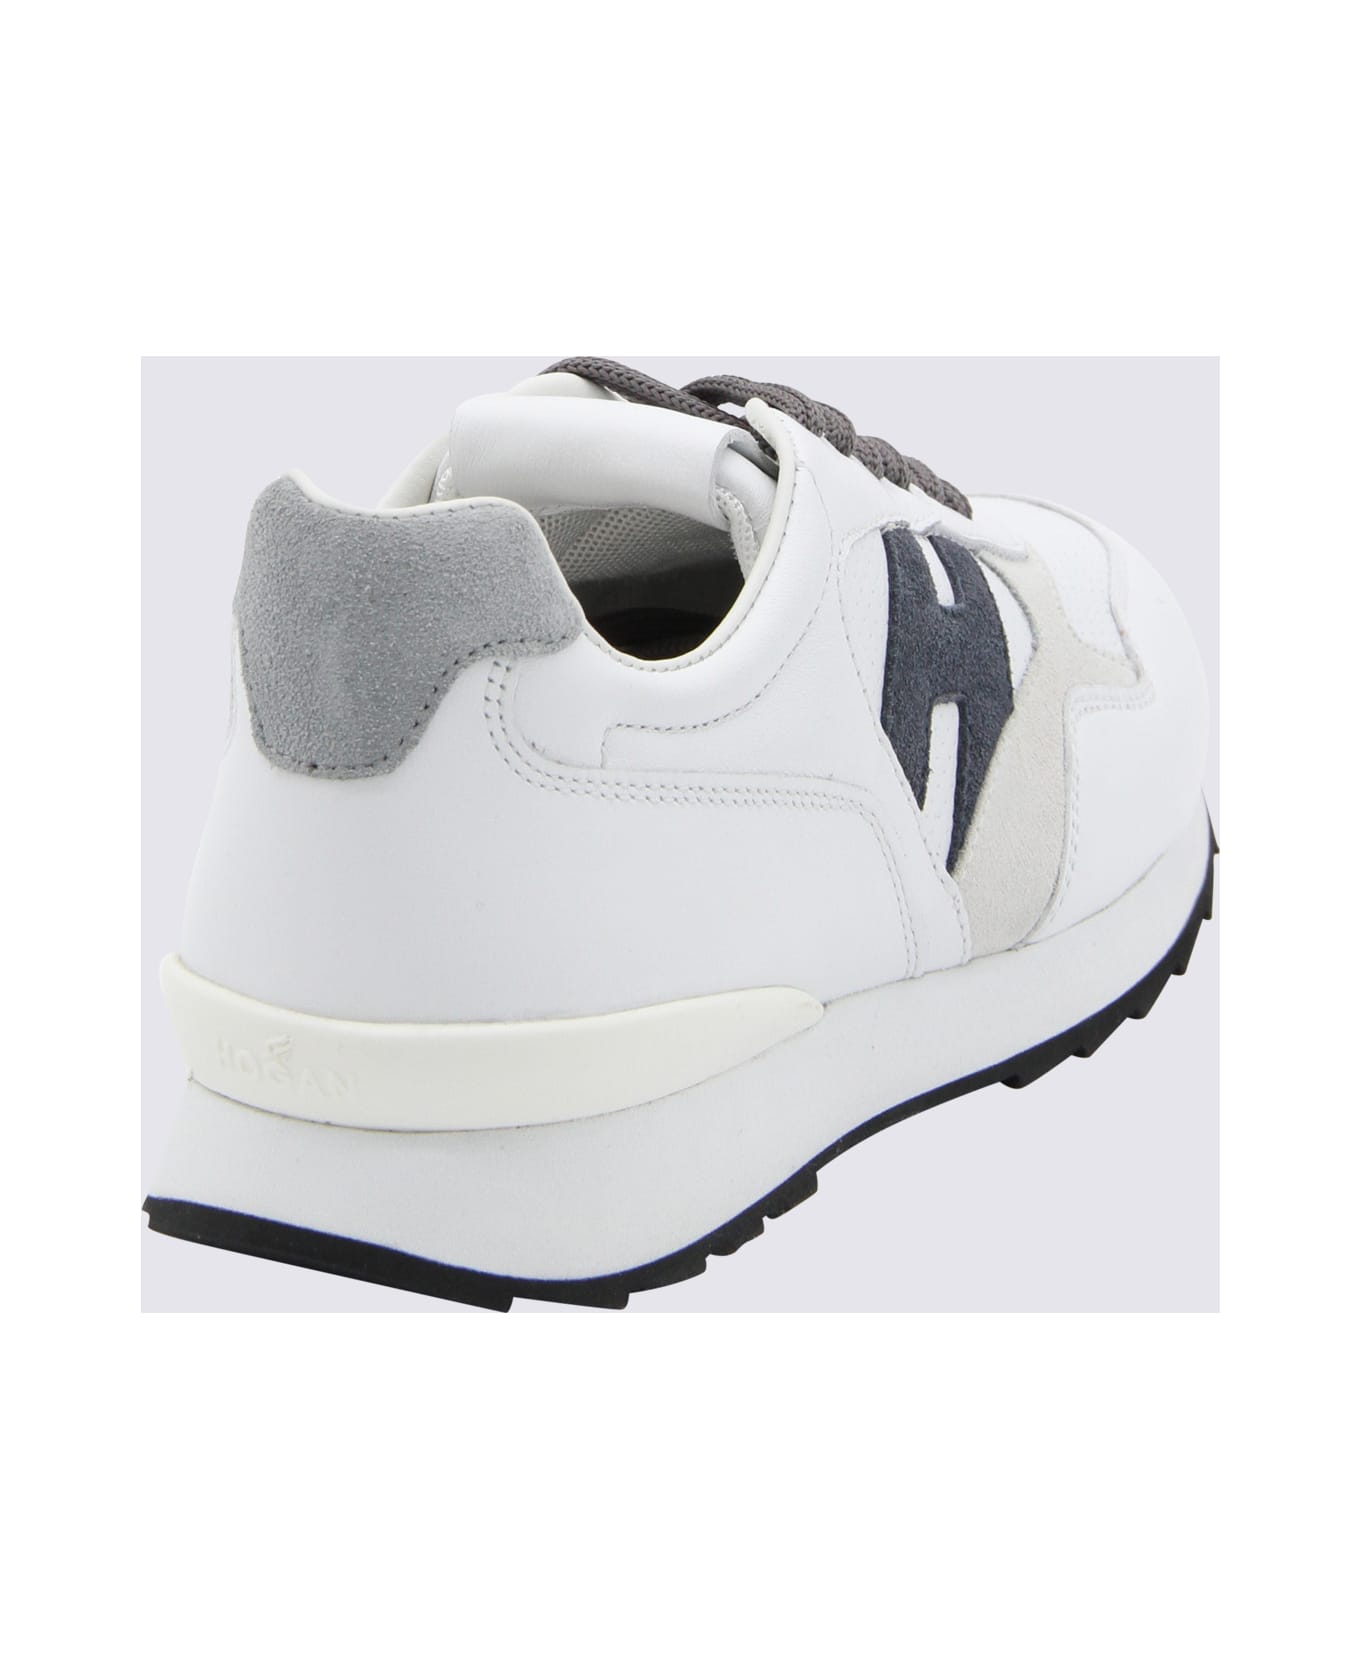 Hogan White Leather R261 Sneakers - White